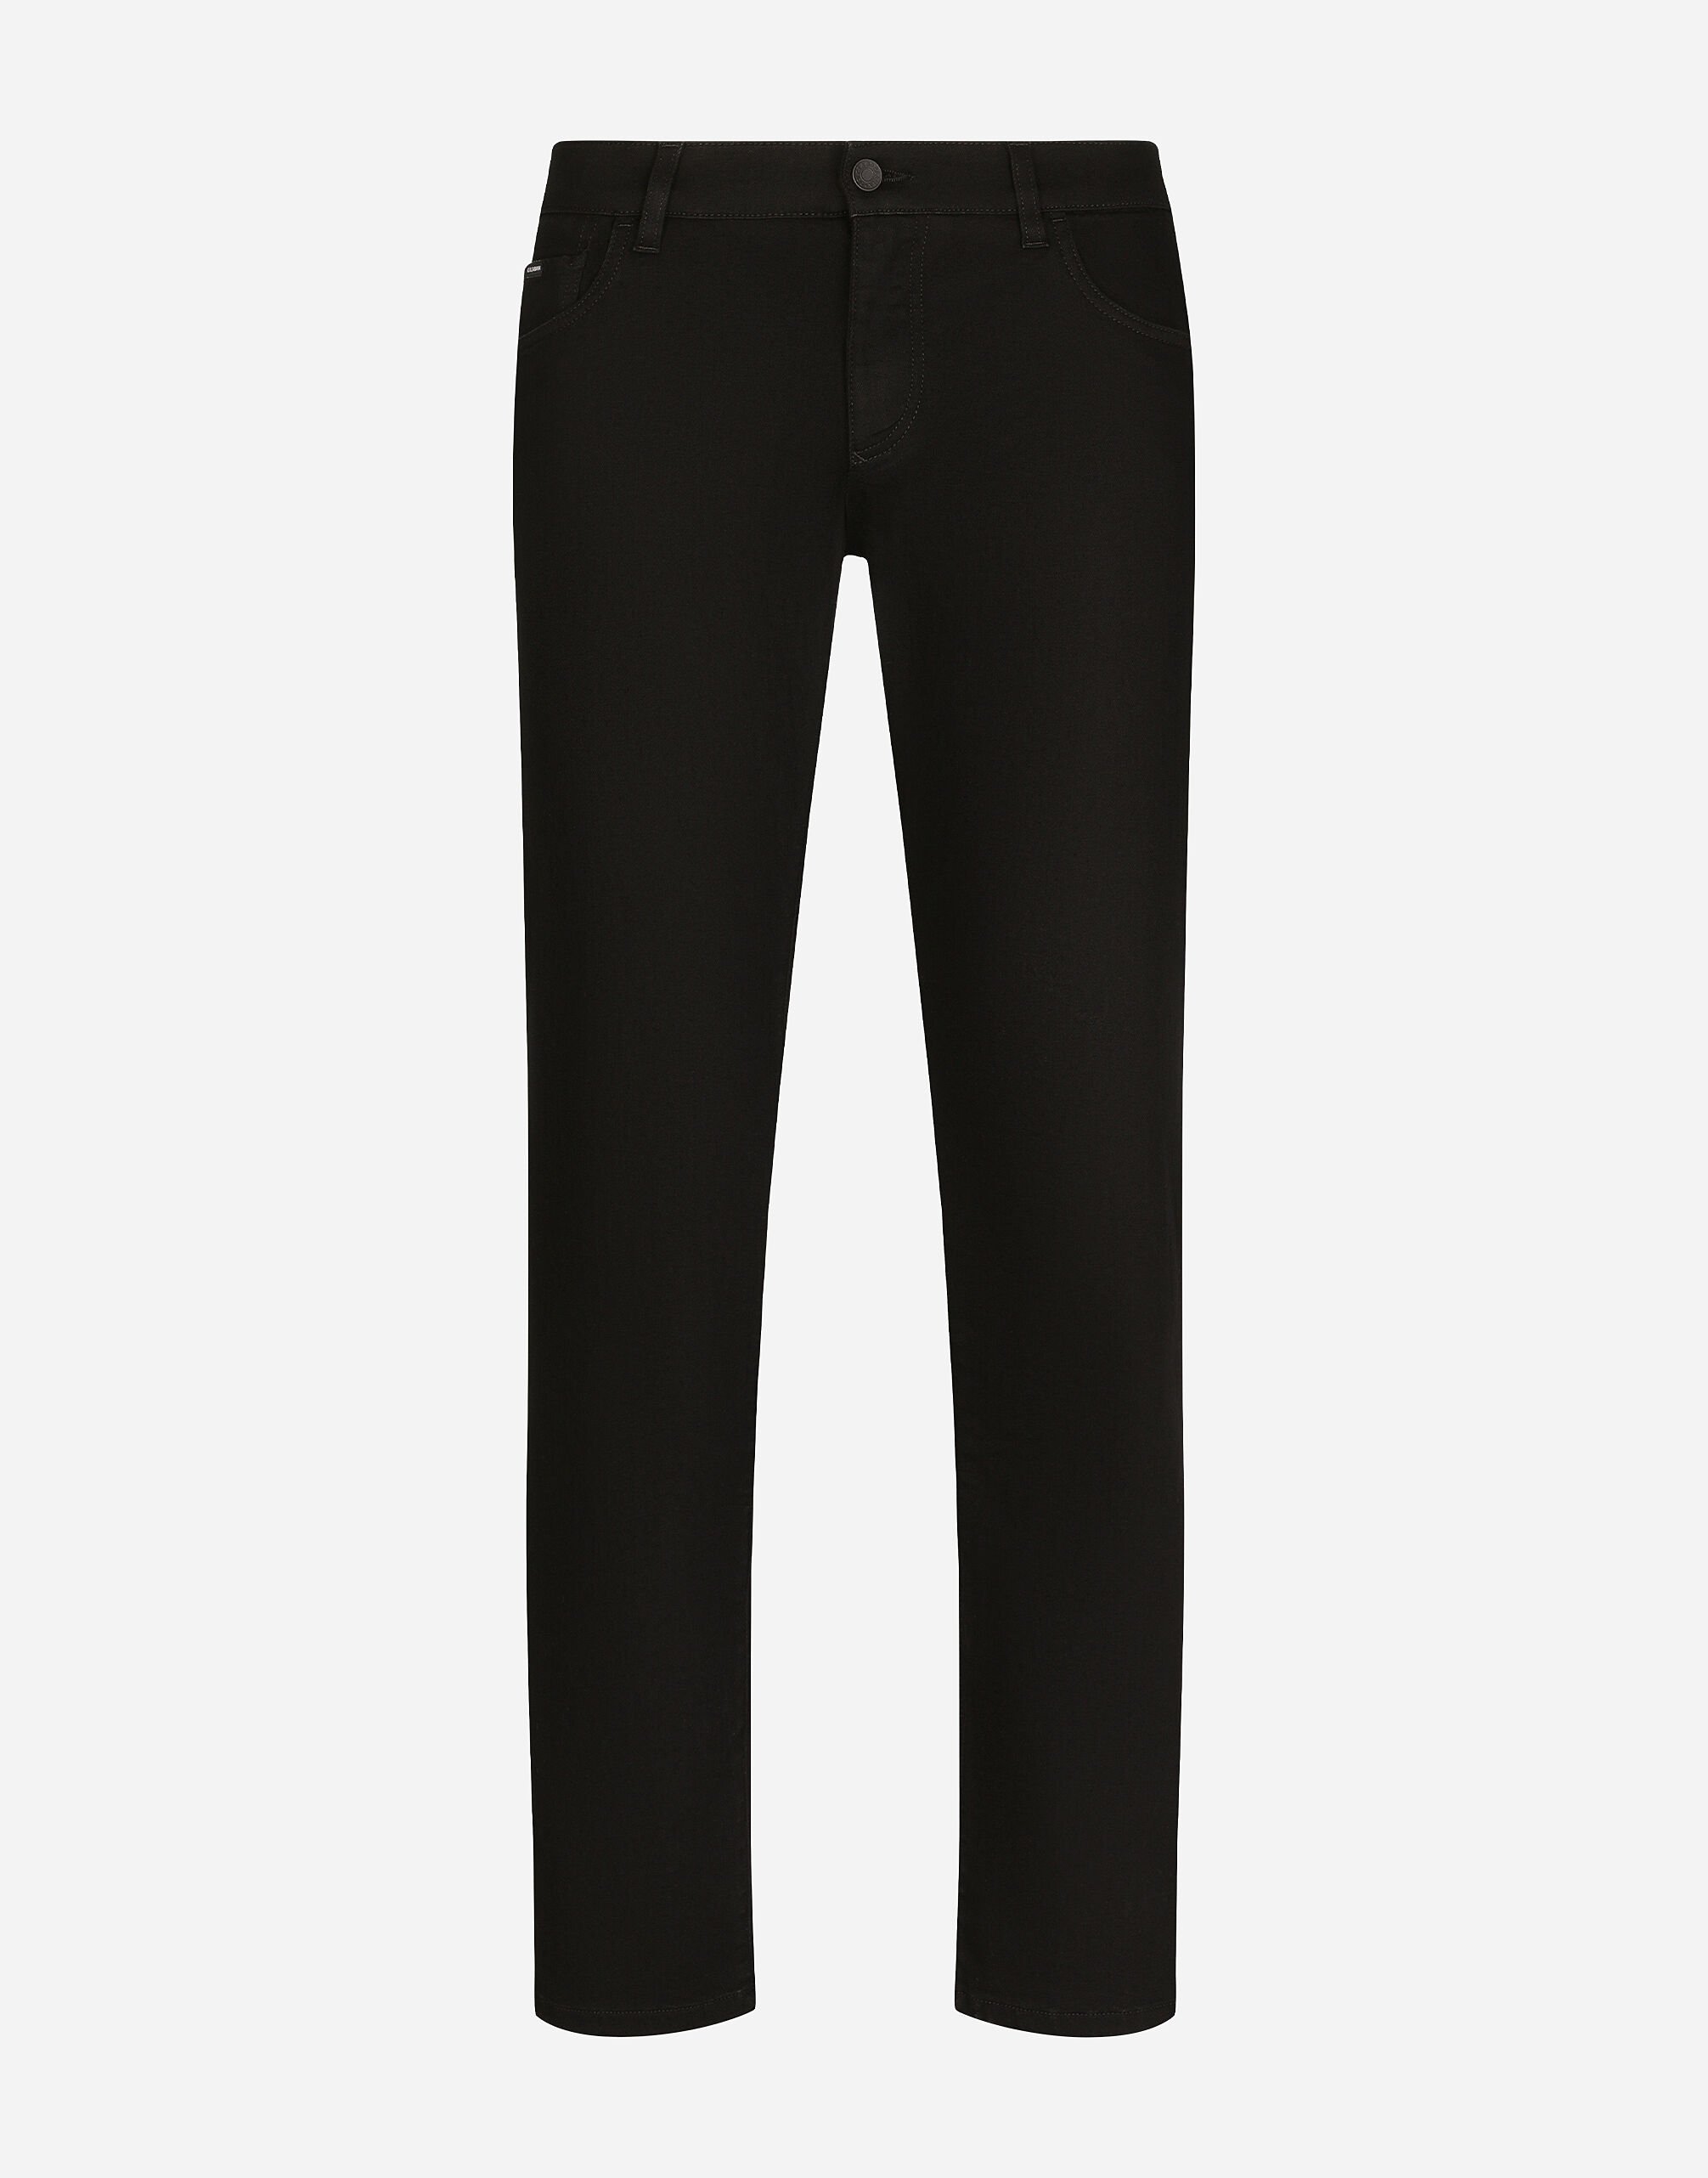 Dolce & Gabbana Black skinny stretch jeans Black GY07CDG8CN9